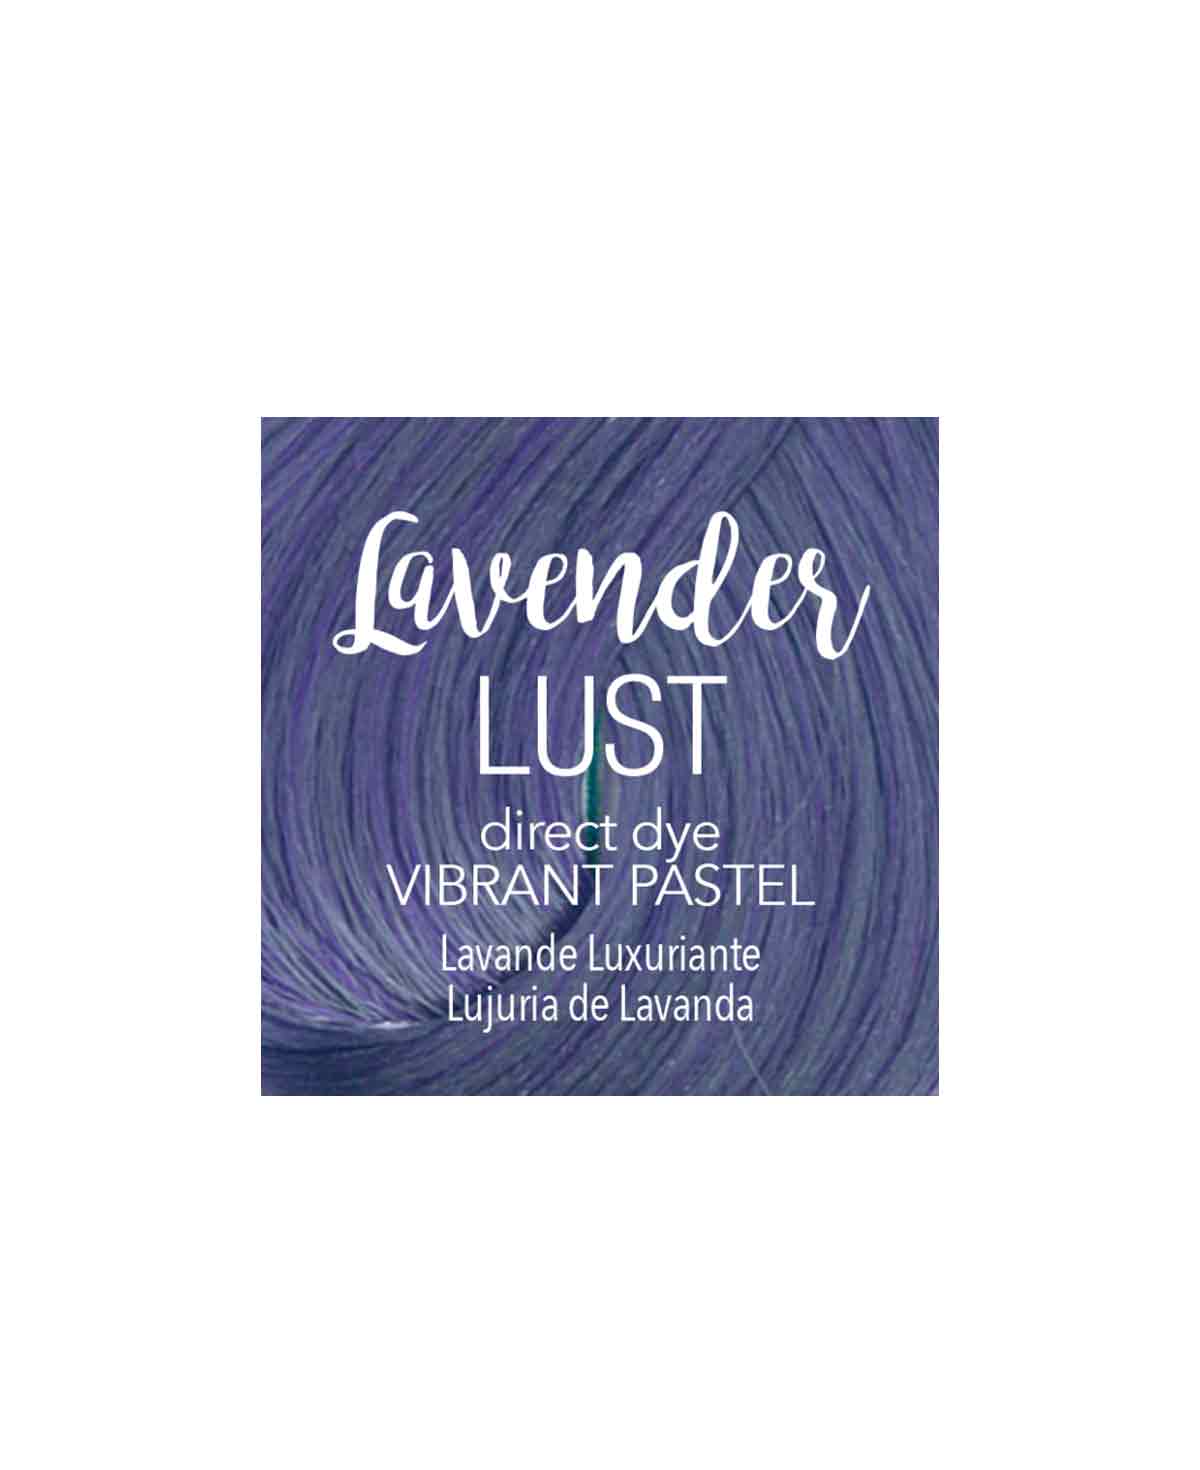 Mydentity - DDVP Lavender Lust 85g